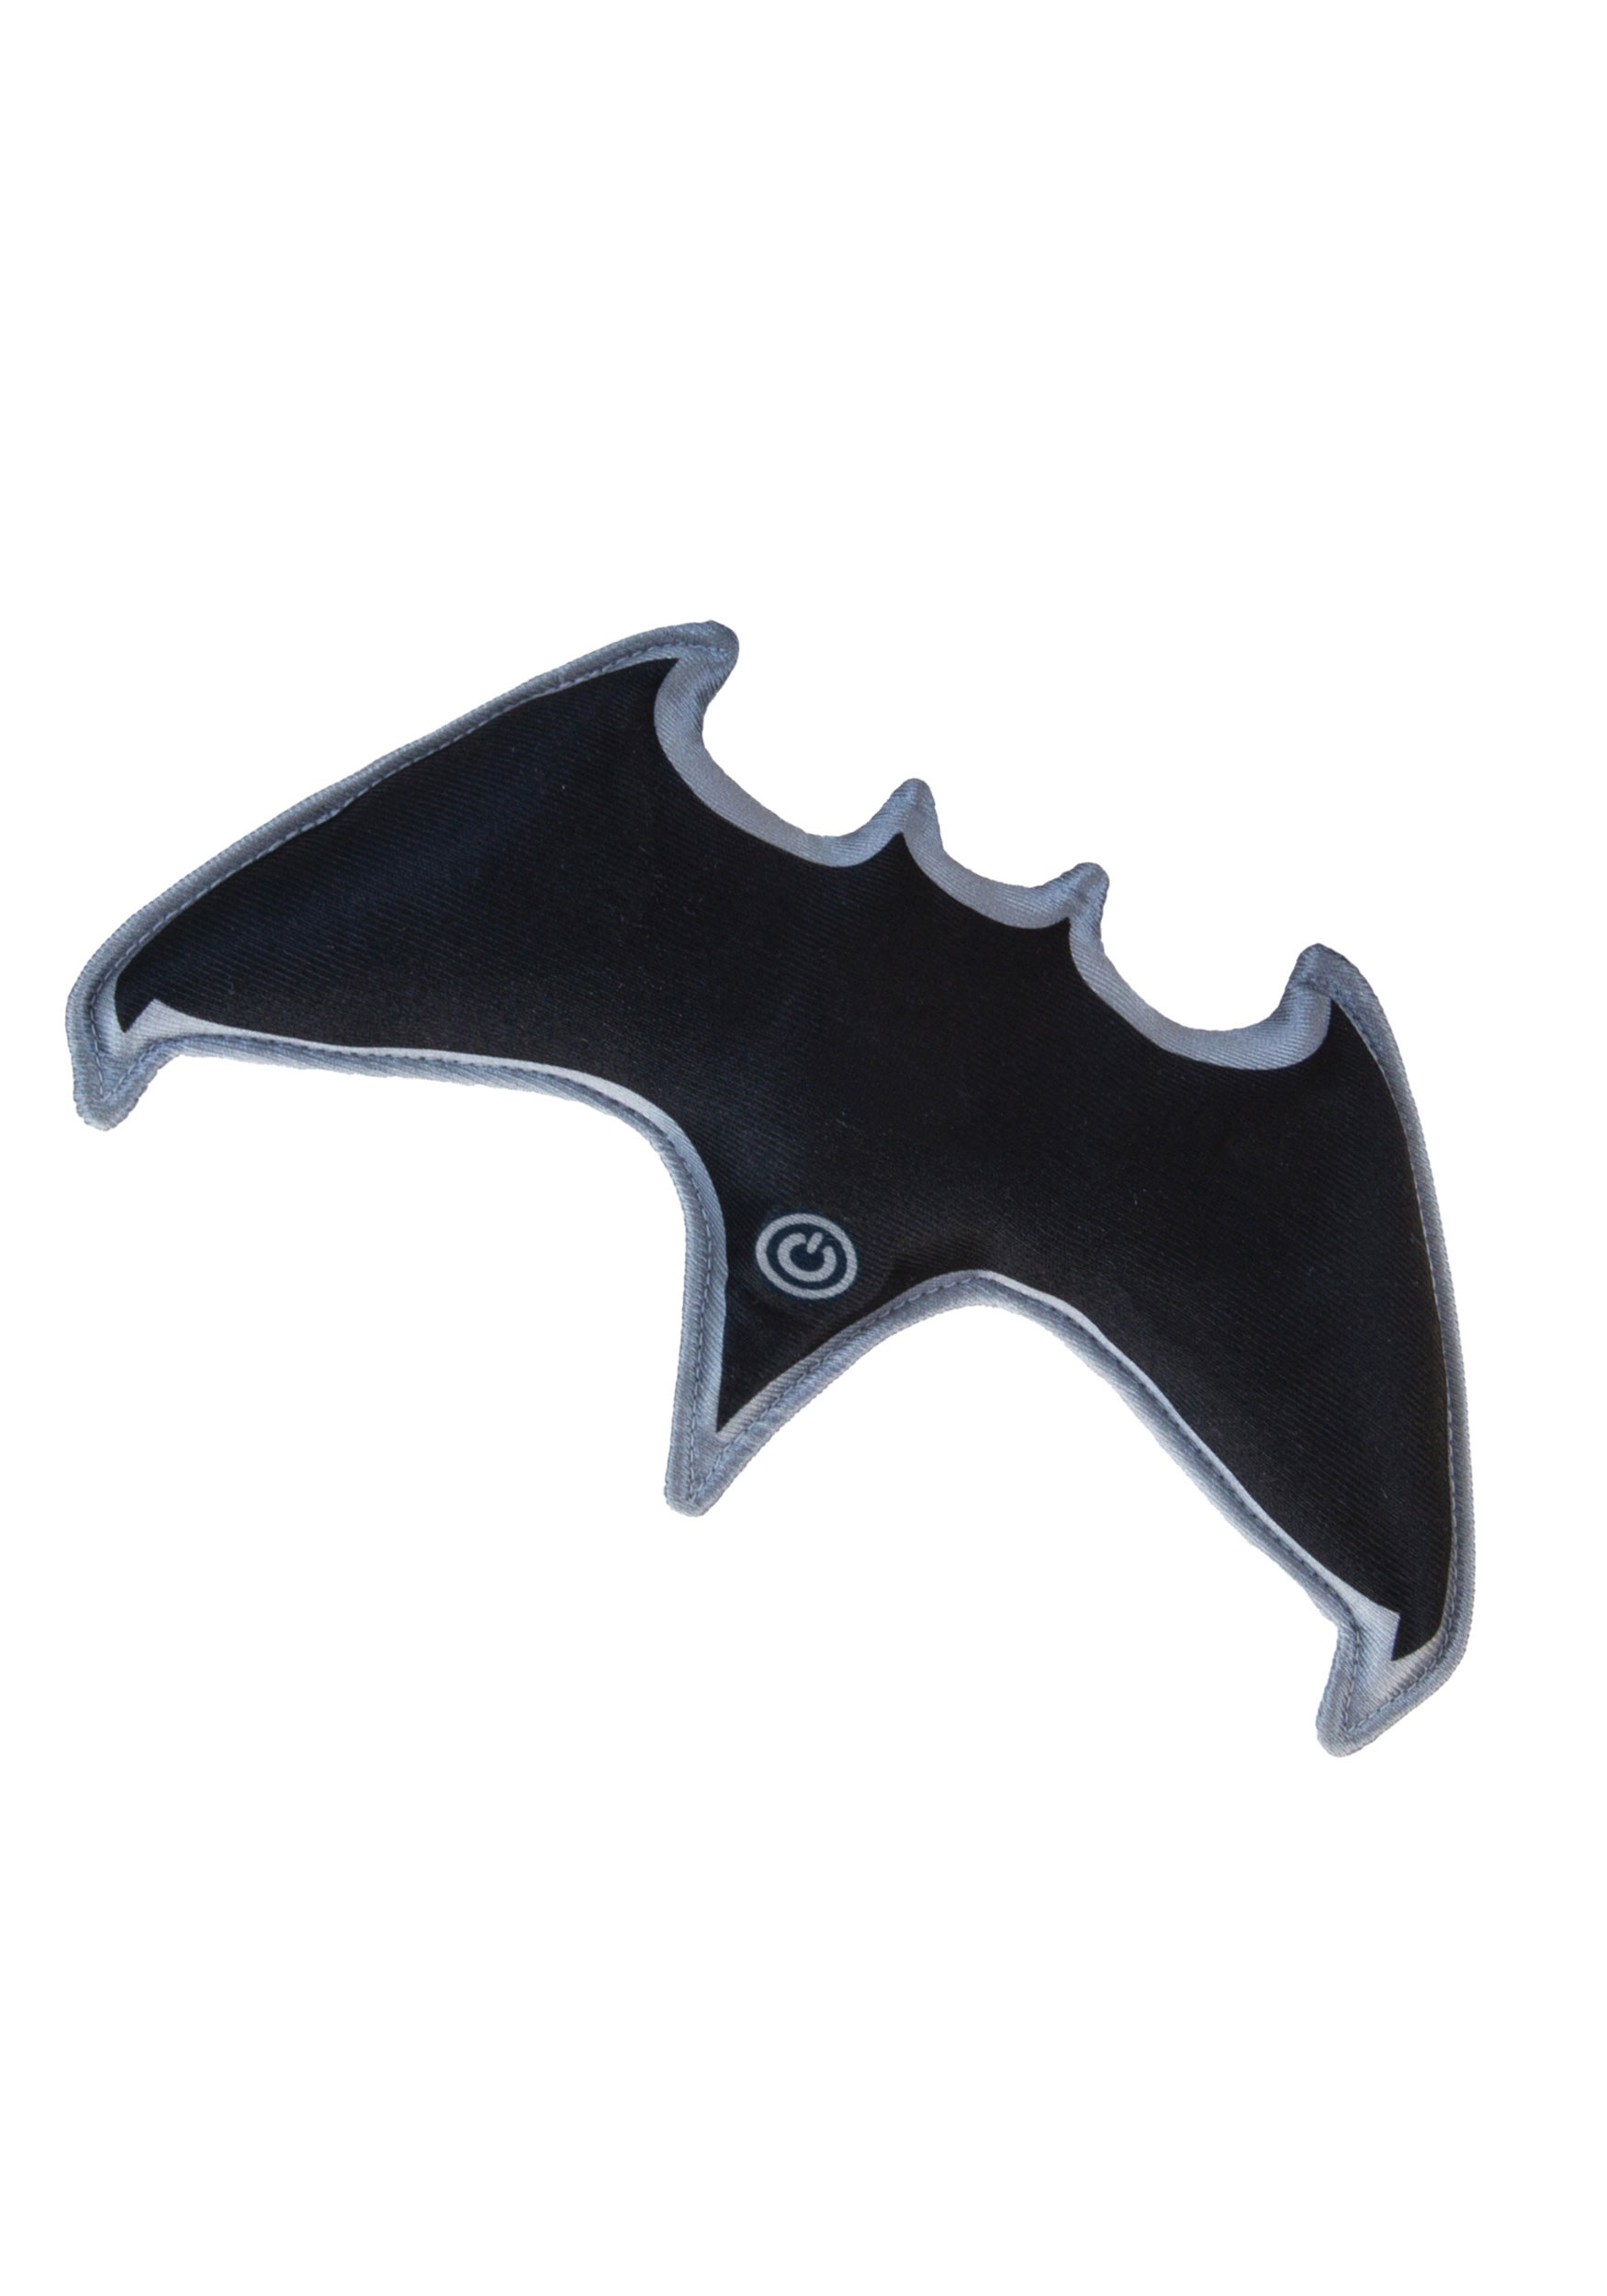 Toy Weapon Batman Batarang from Batman v Superman